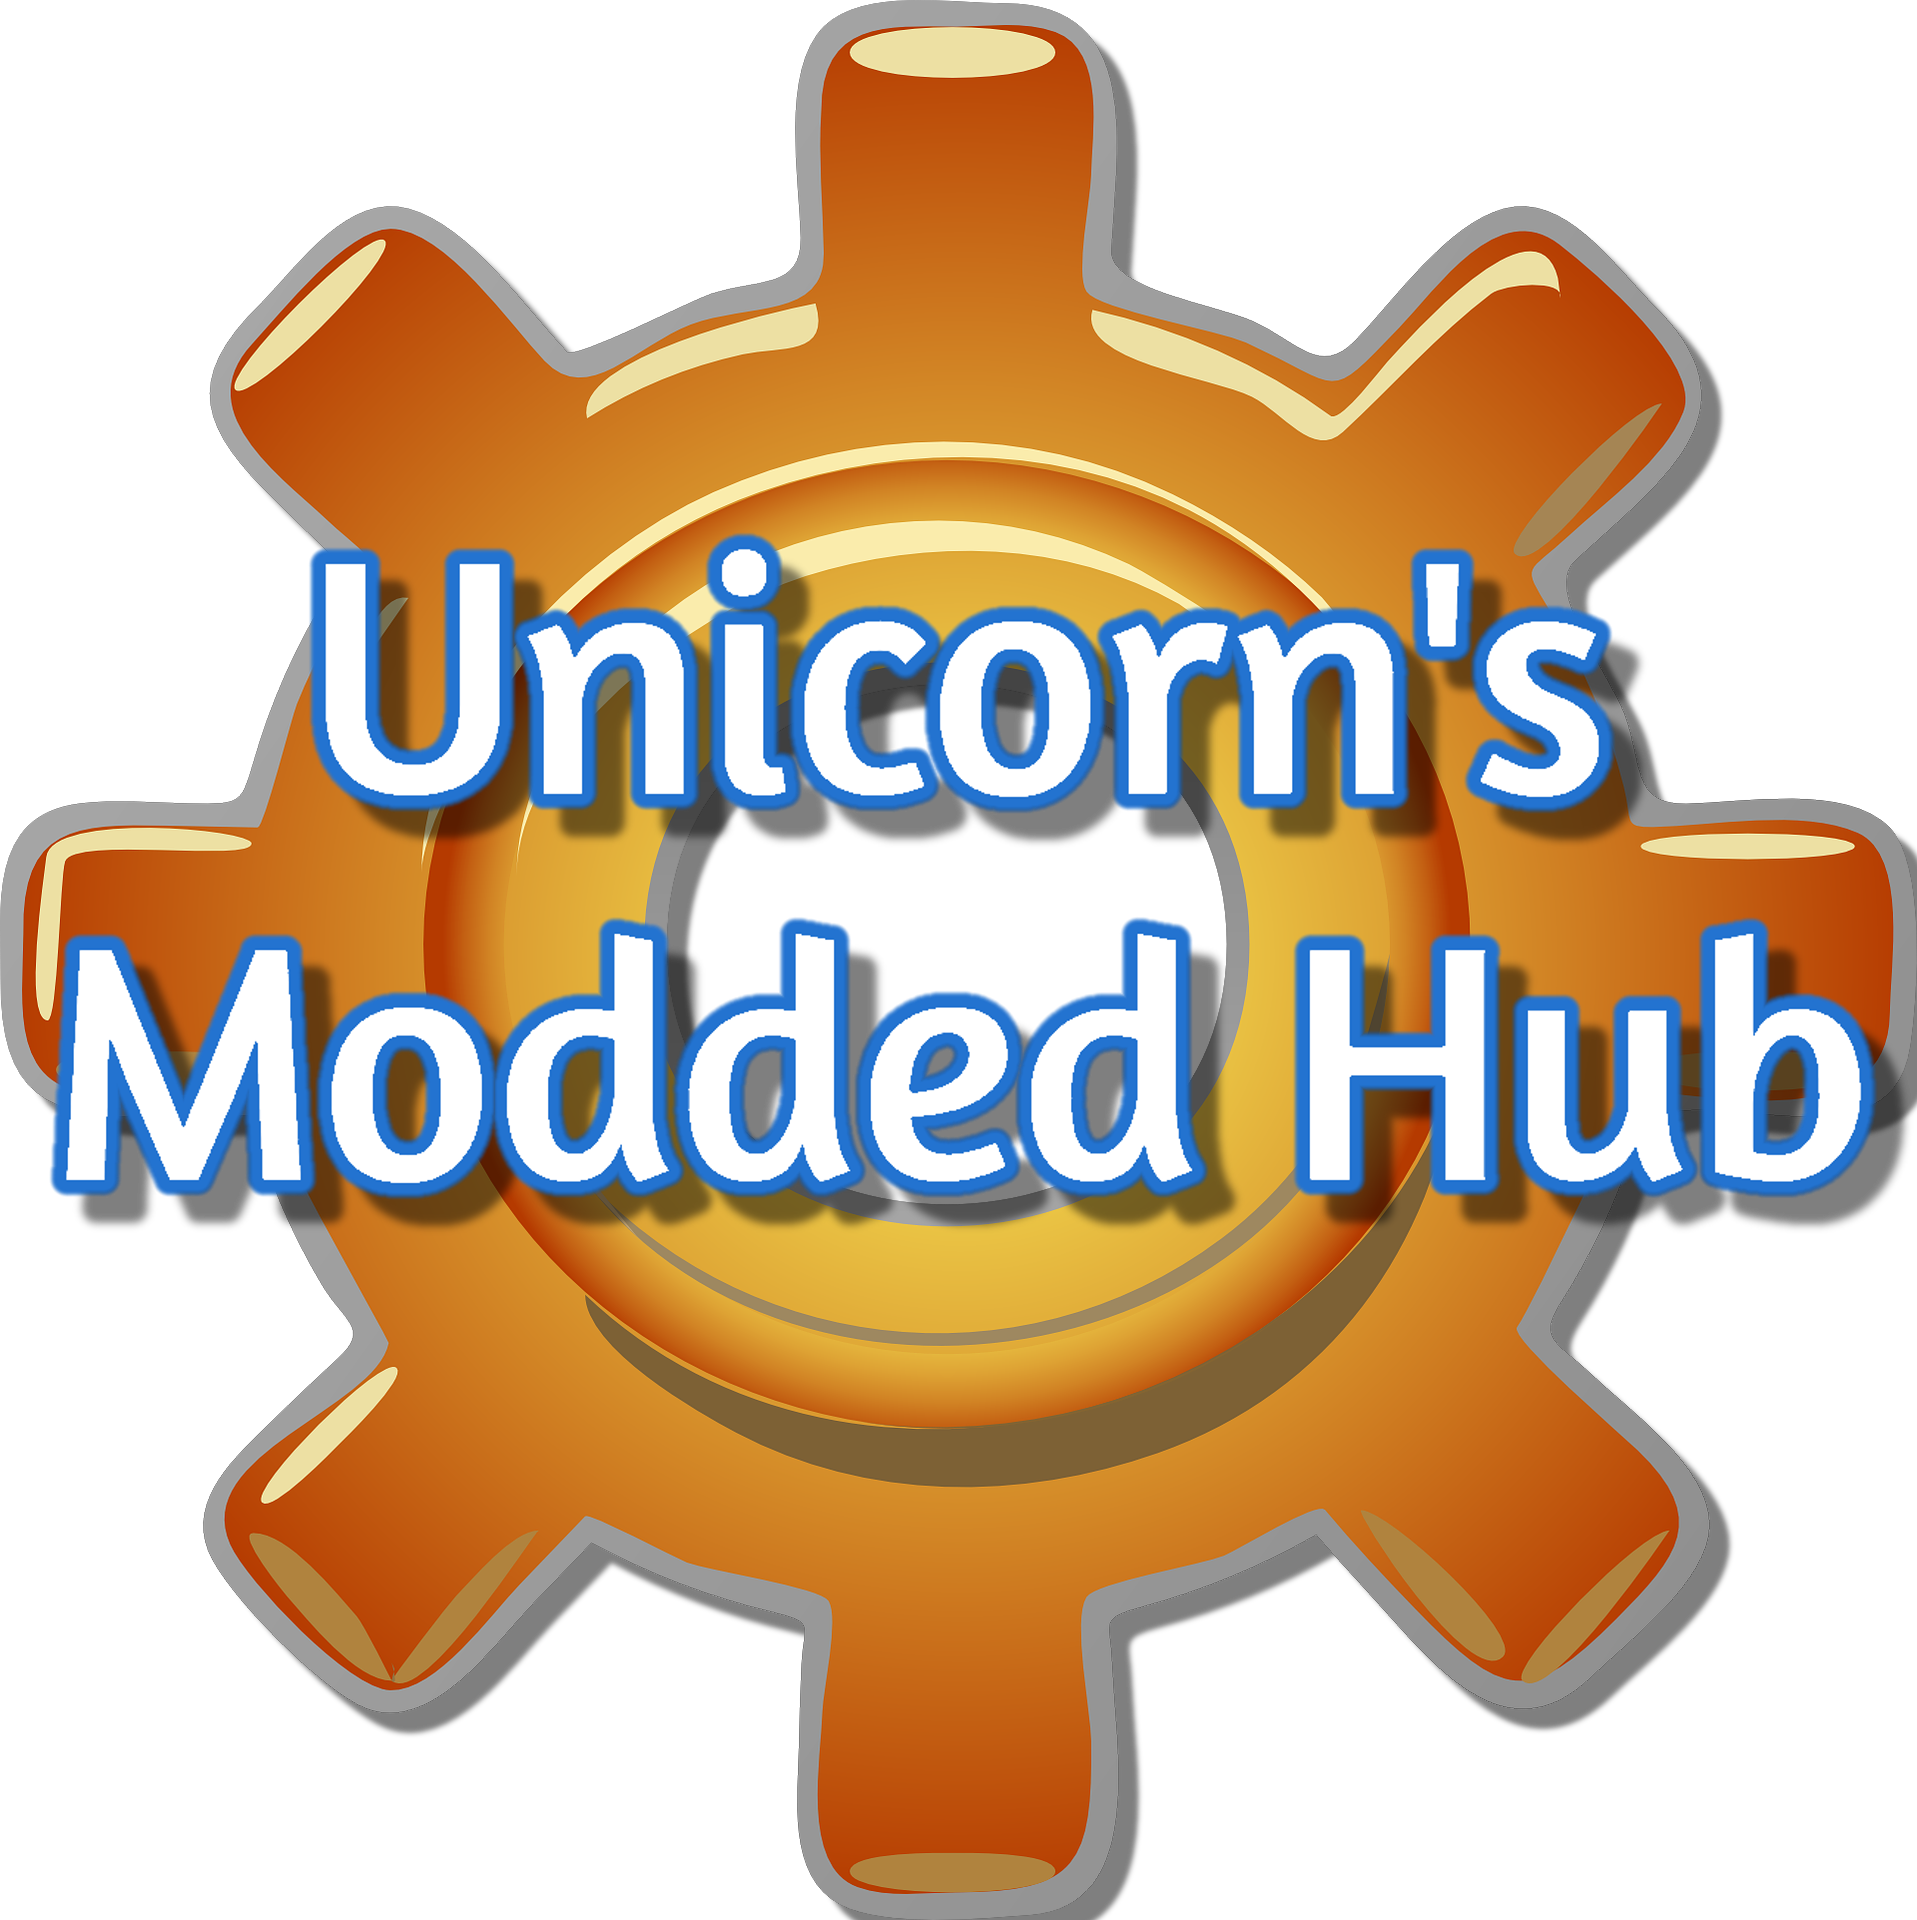 Unicorn's Modded Hub